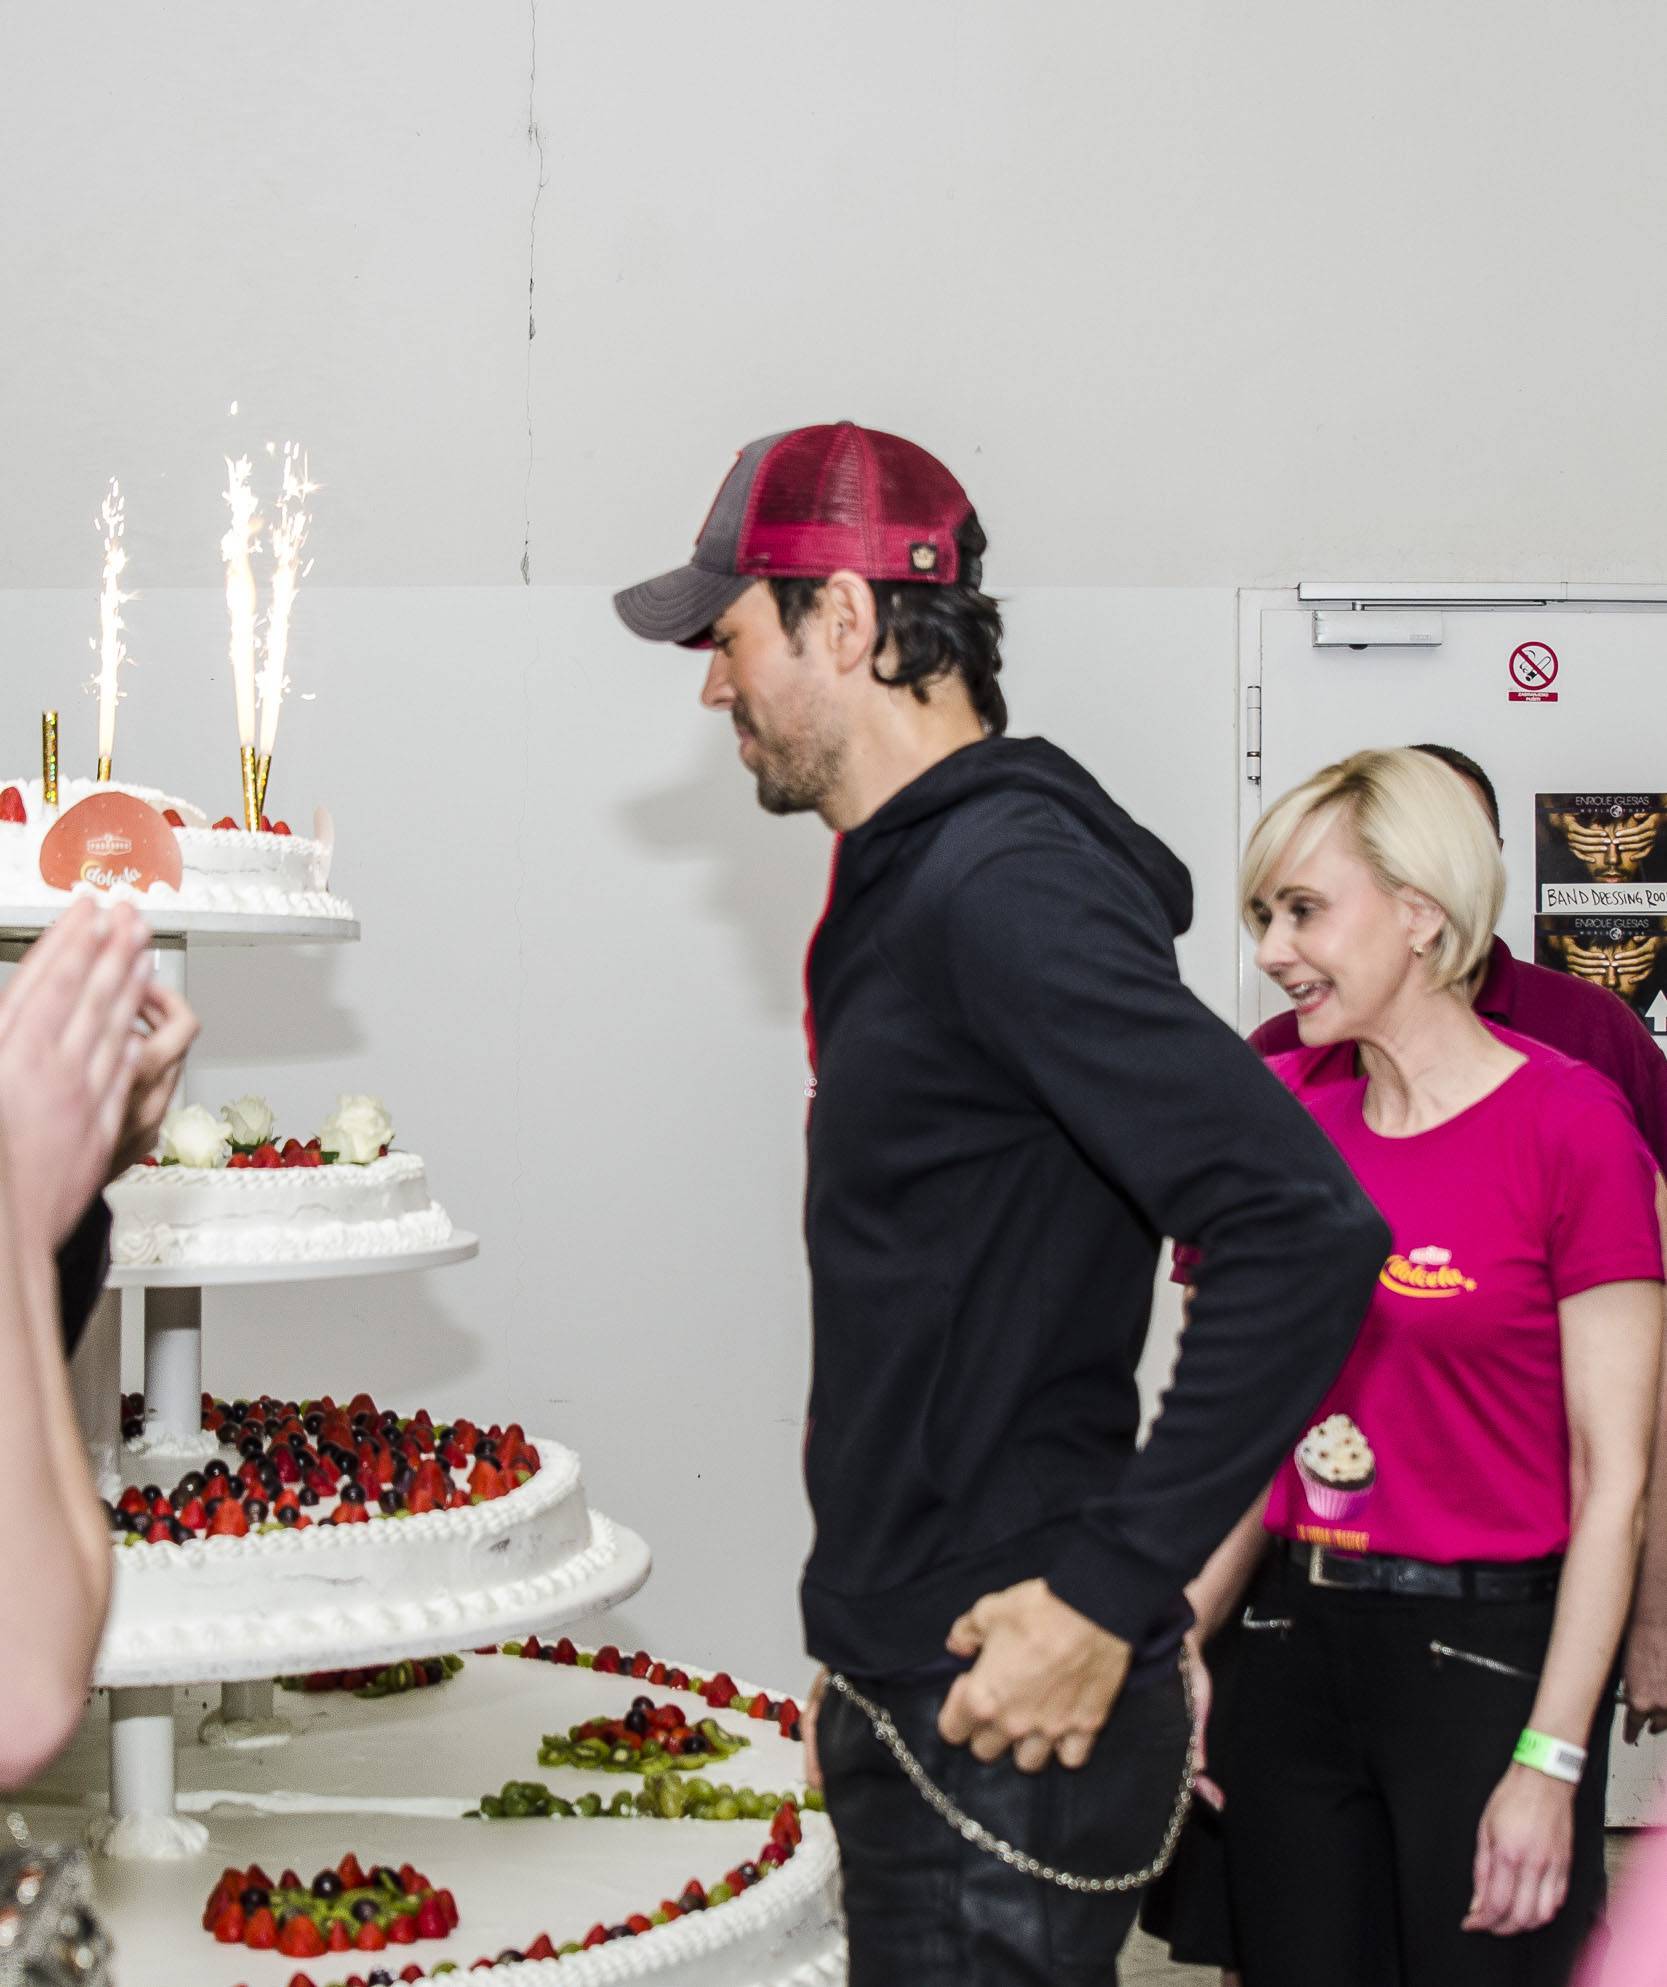 Enrique je na koncertu dobio rođendansku tortu od 500 kg